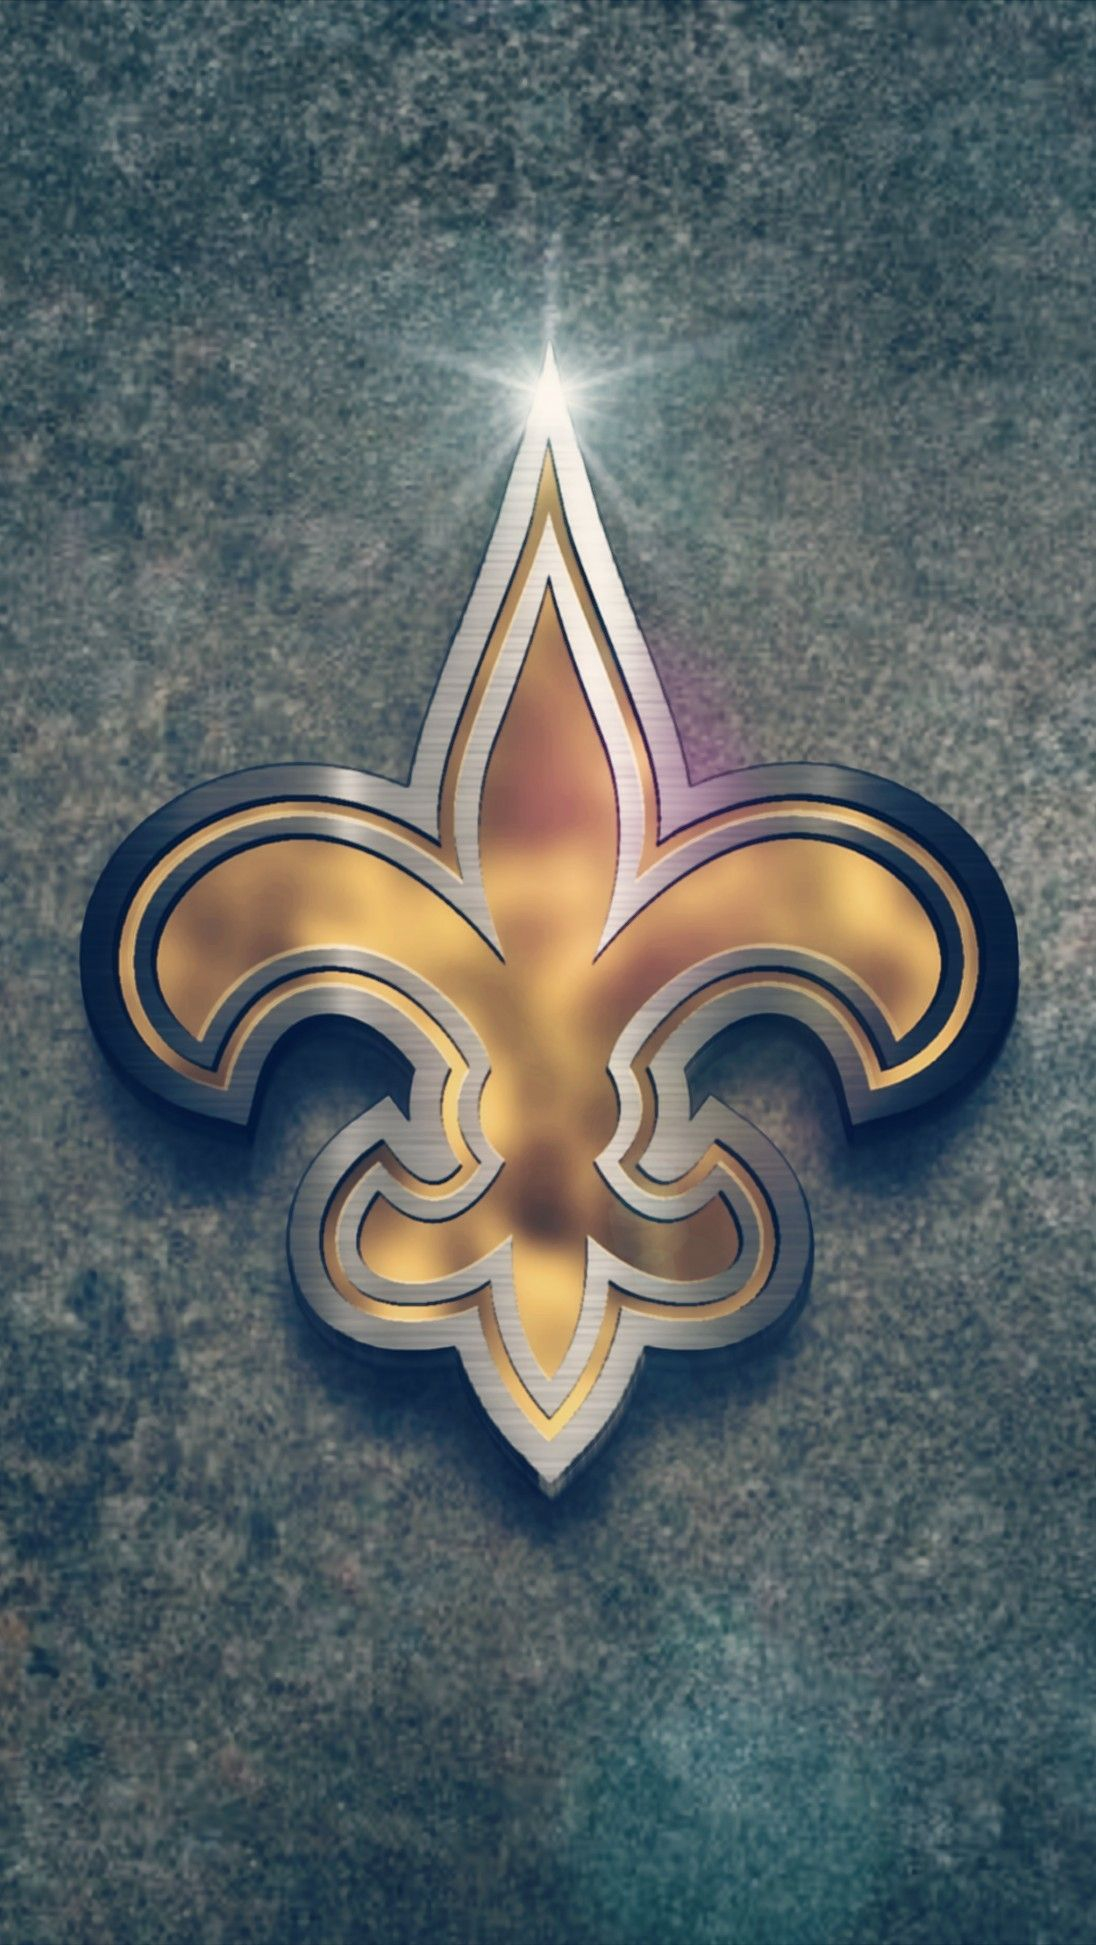 1096x1945 NFL New Orleans Logo Wallpaper | New orleans saints logo, New orleans saints football, New orleans saints